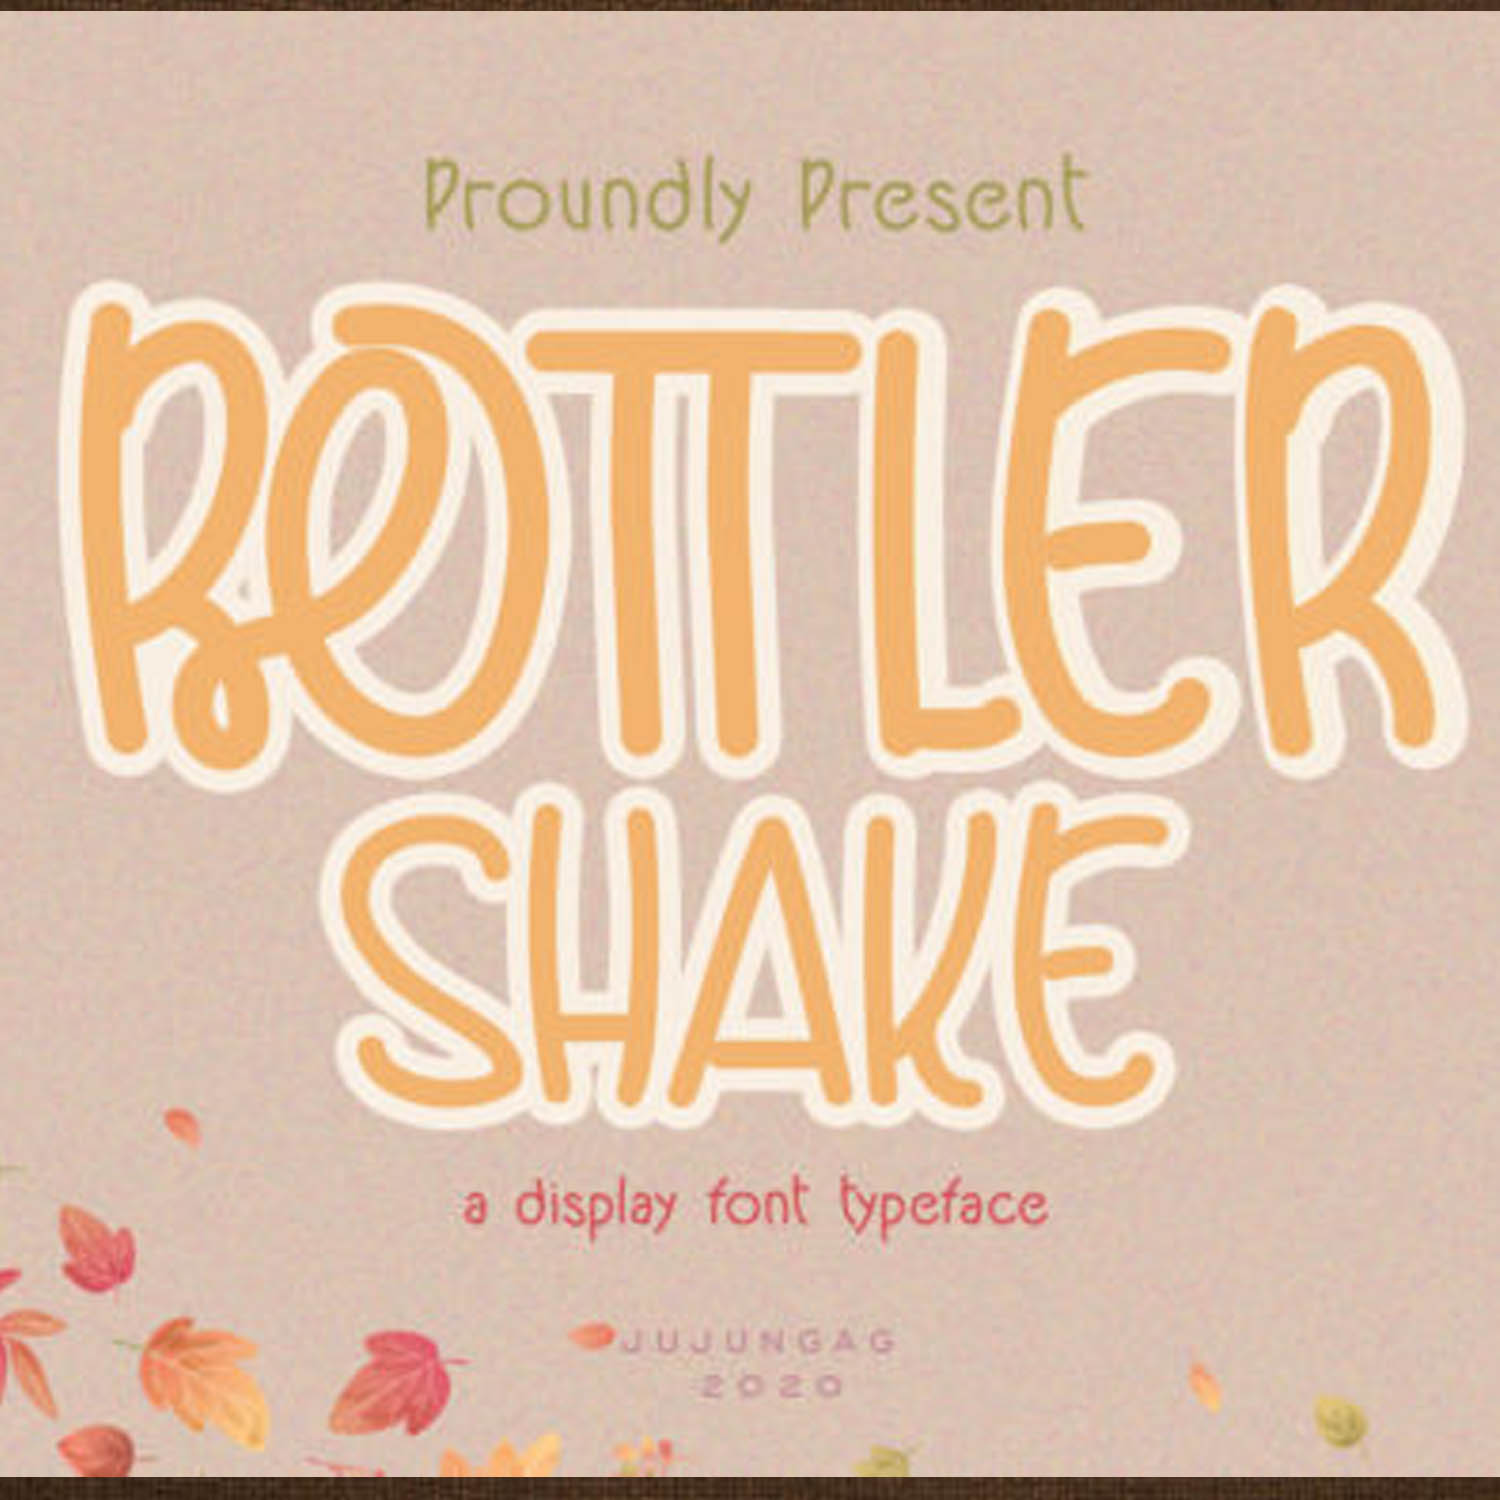 Bottler Shake Font cover image.